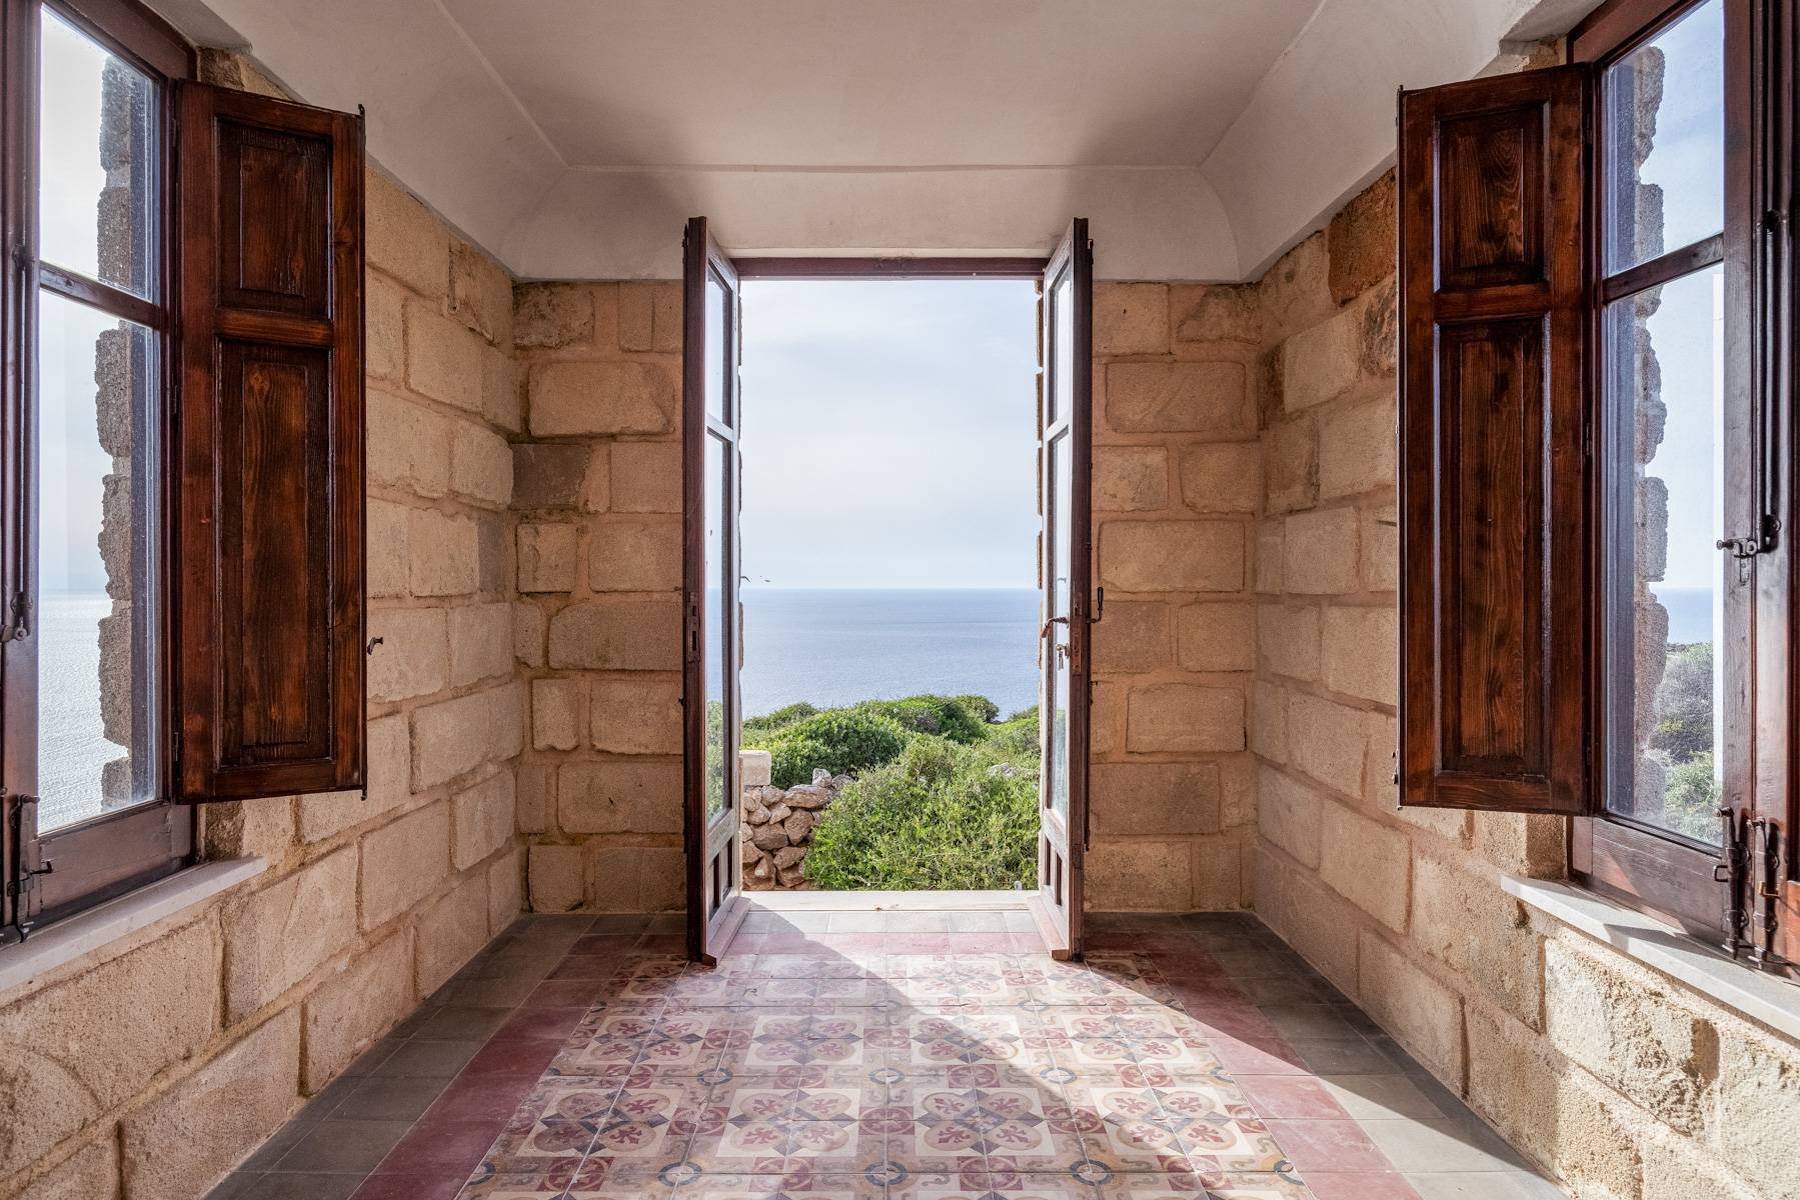 Francis York One-of-a-Kind Italian Estate in the Egadi Islands, Sicily Italy Sothebys 00023.jpg